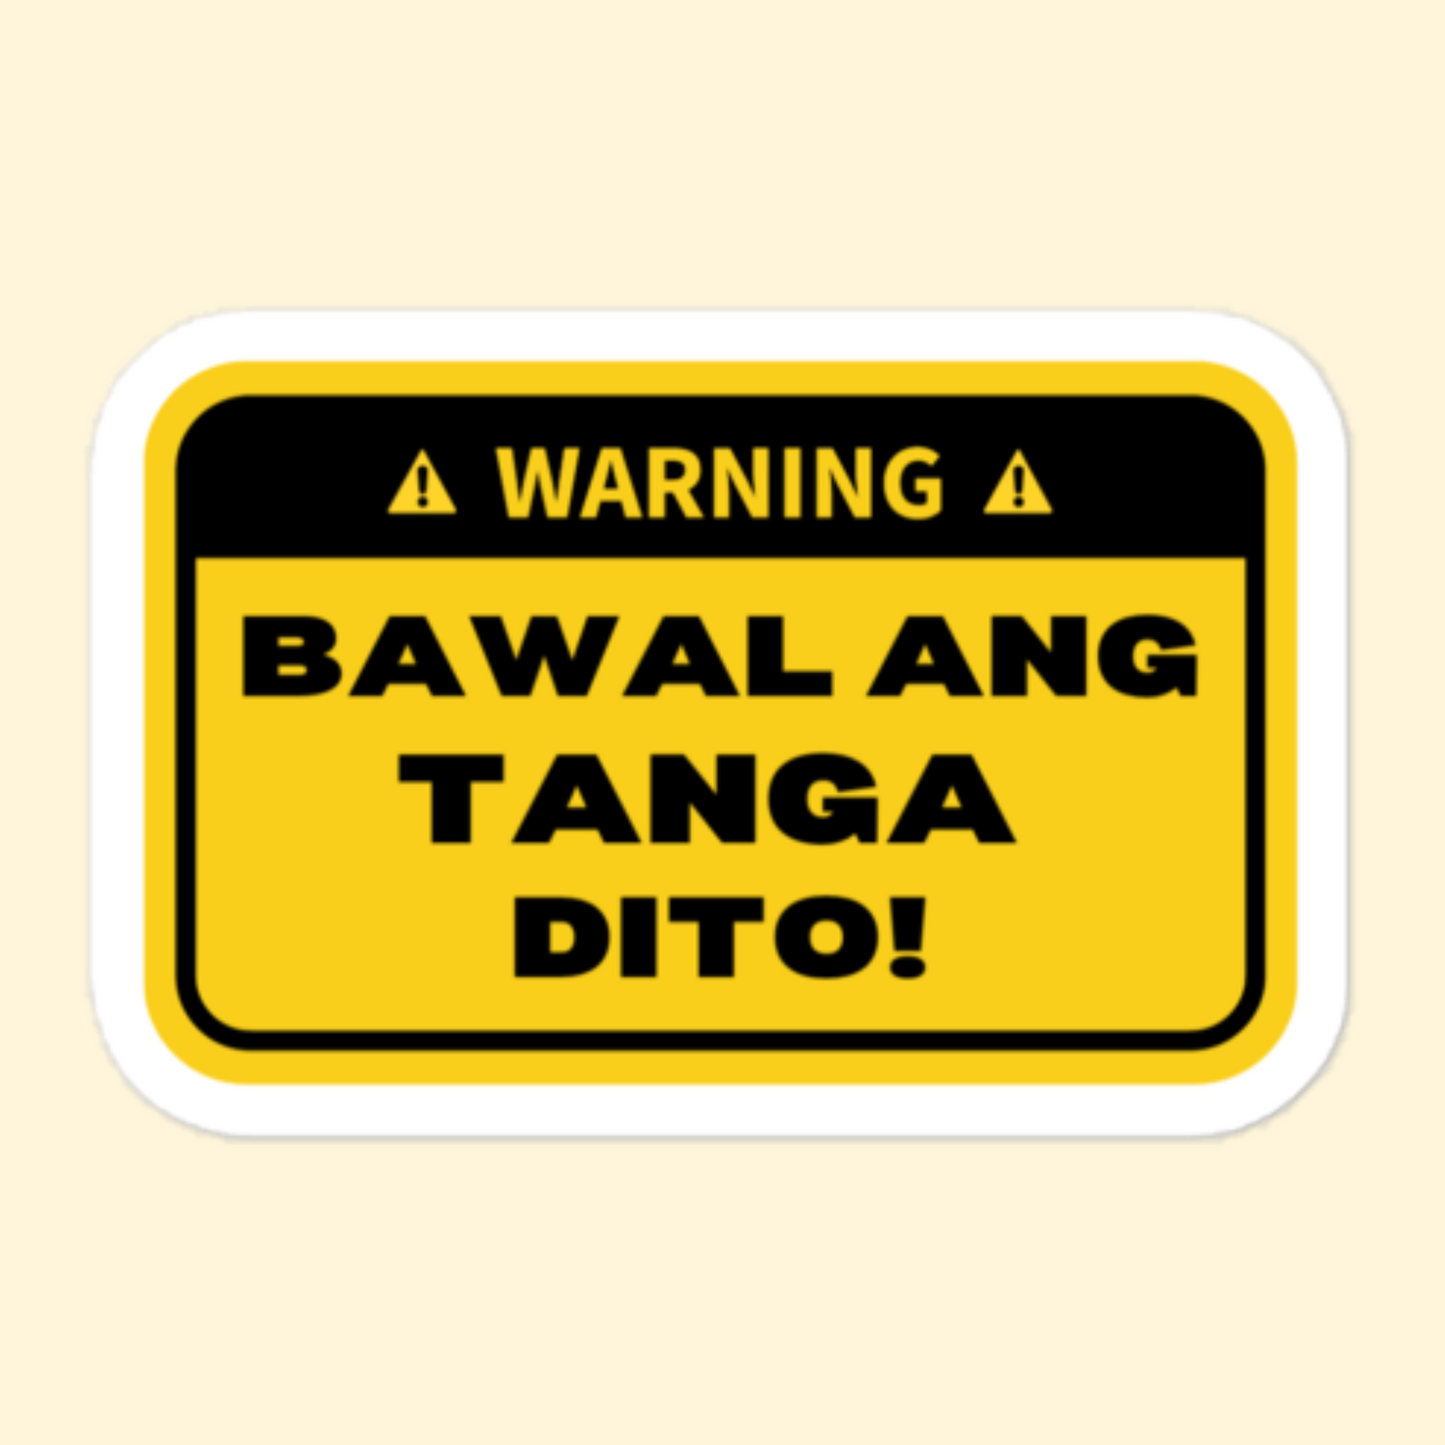 Bawal Ang Pangit Tanga Fragile Sa Pagibig Tagalog Pinoy Decals variant Bawal Ang Tanga Decal